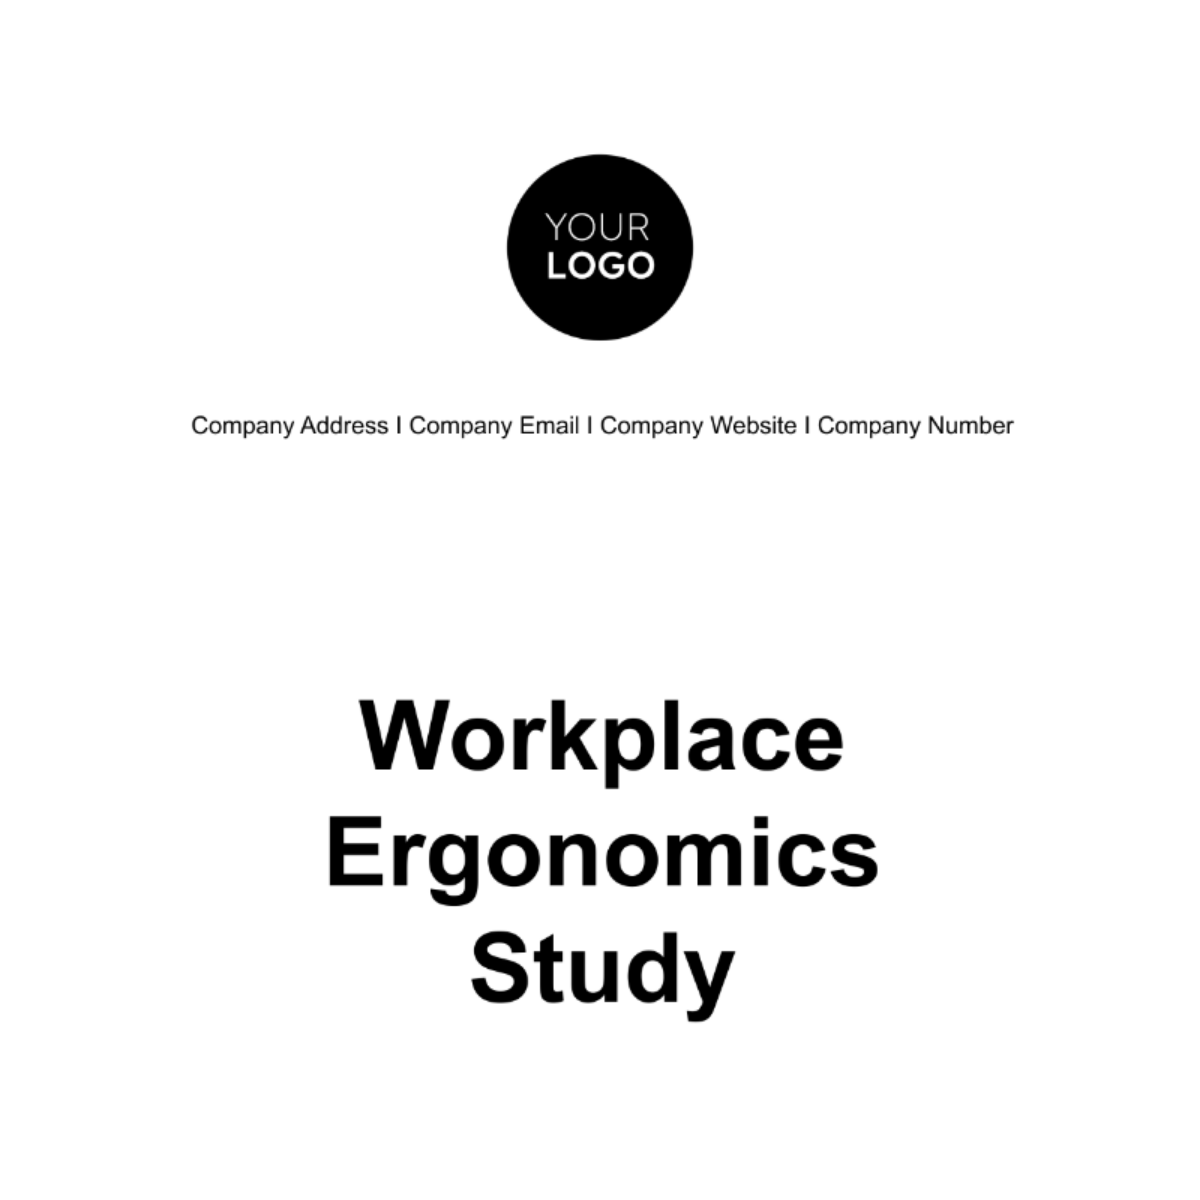 Workplace Ergonomics Study HR Template